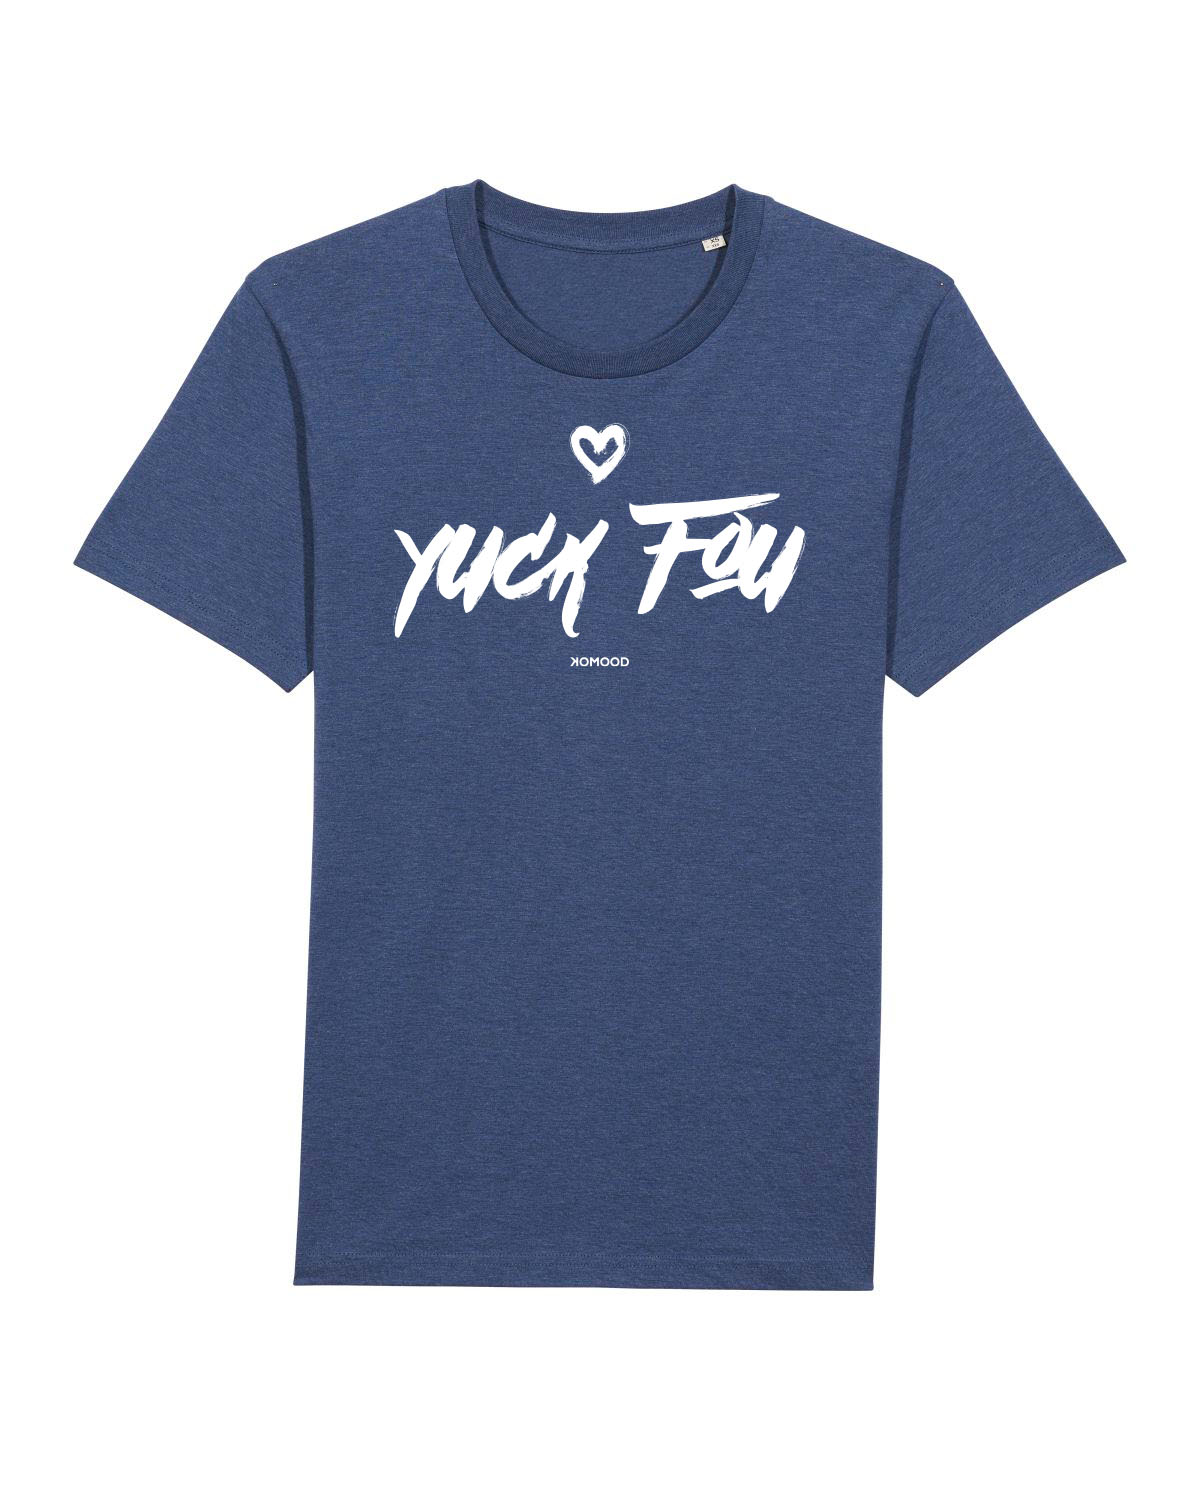 YuckFou! Unisex Premium T-Shirt